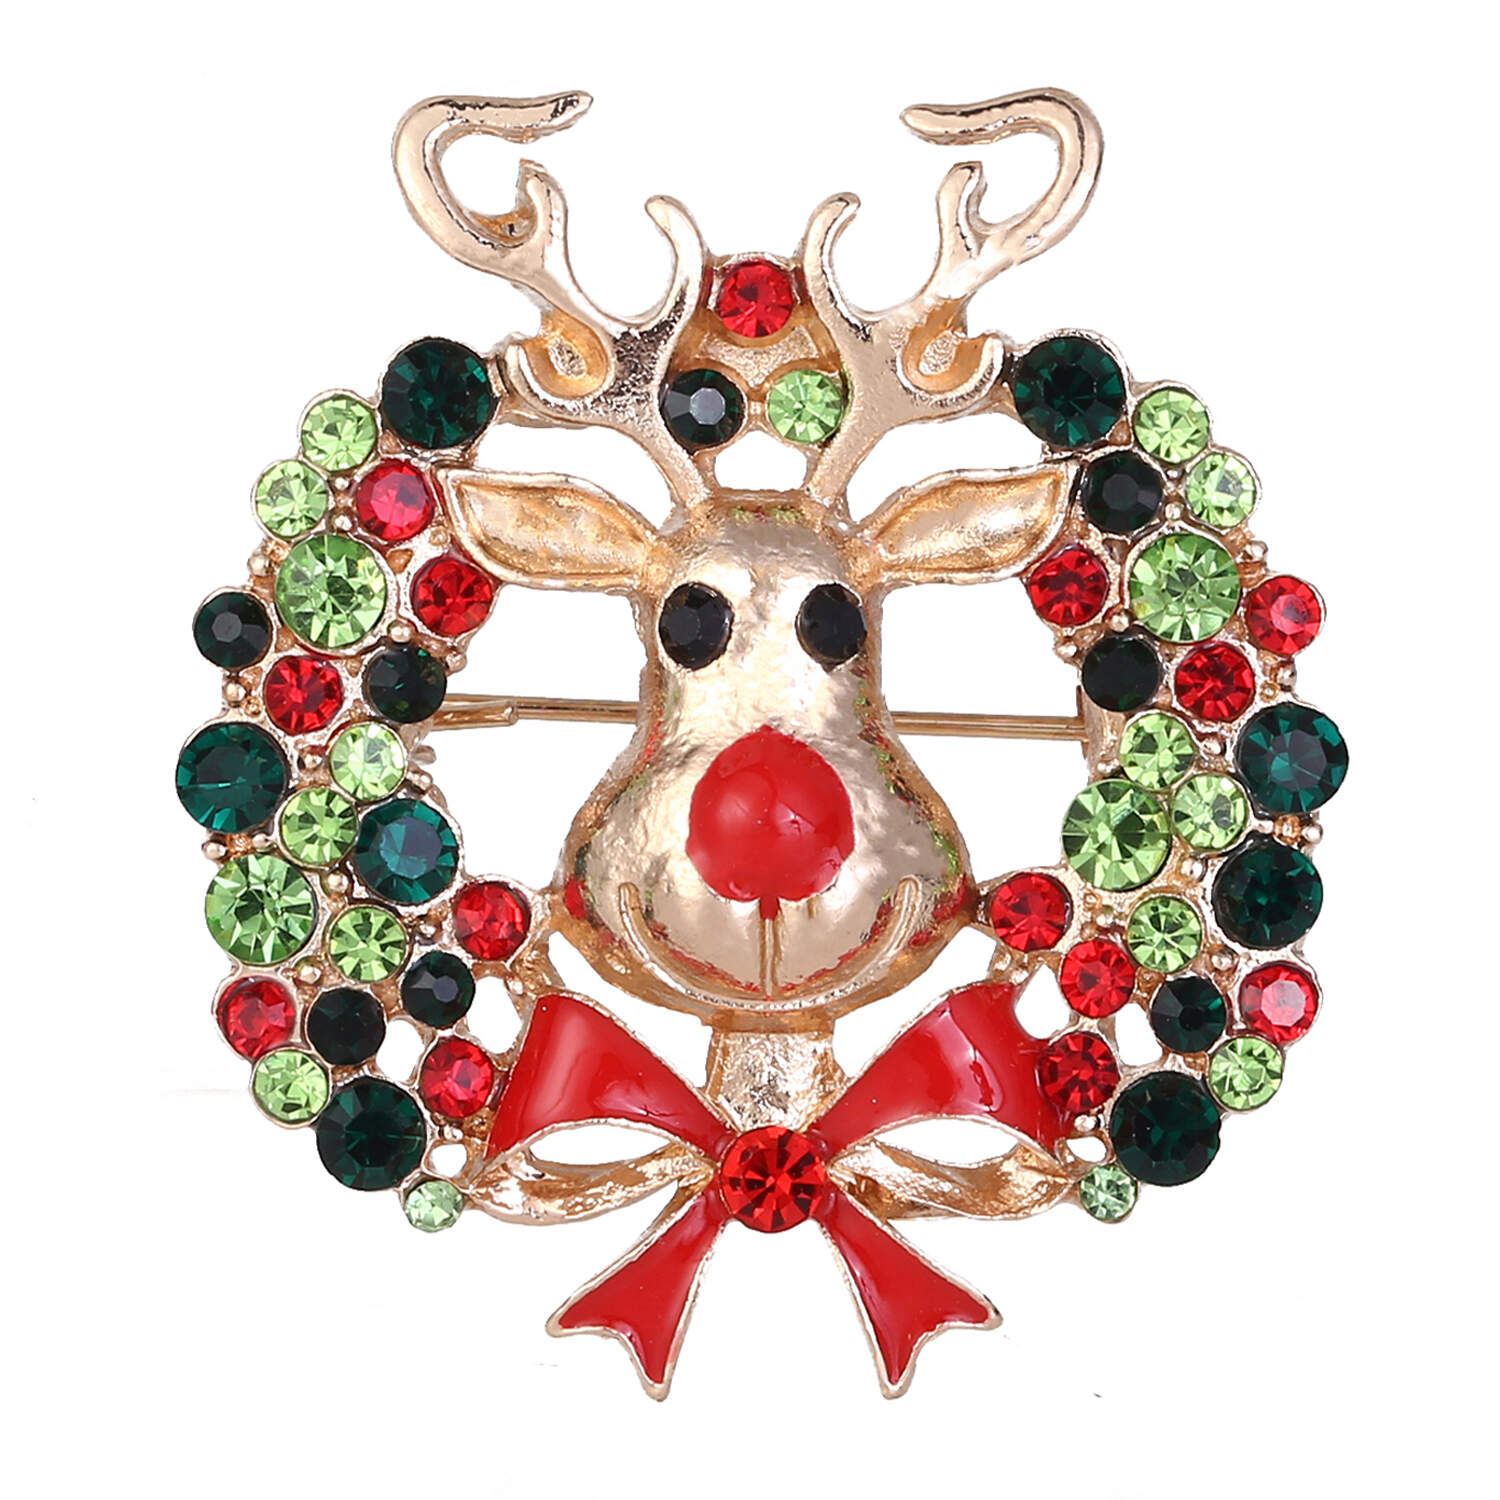 Rudolph in a Wreath